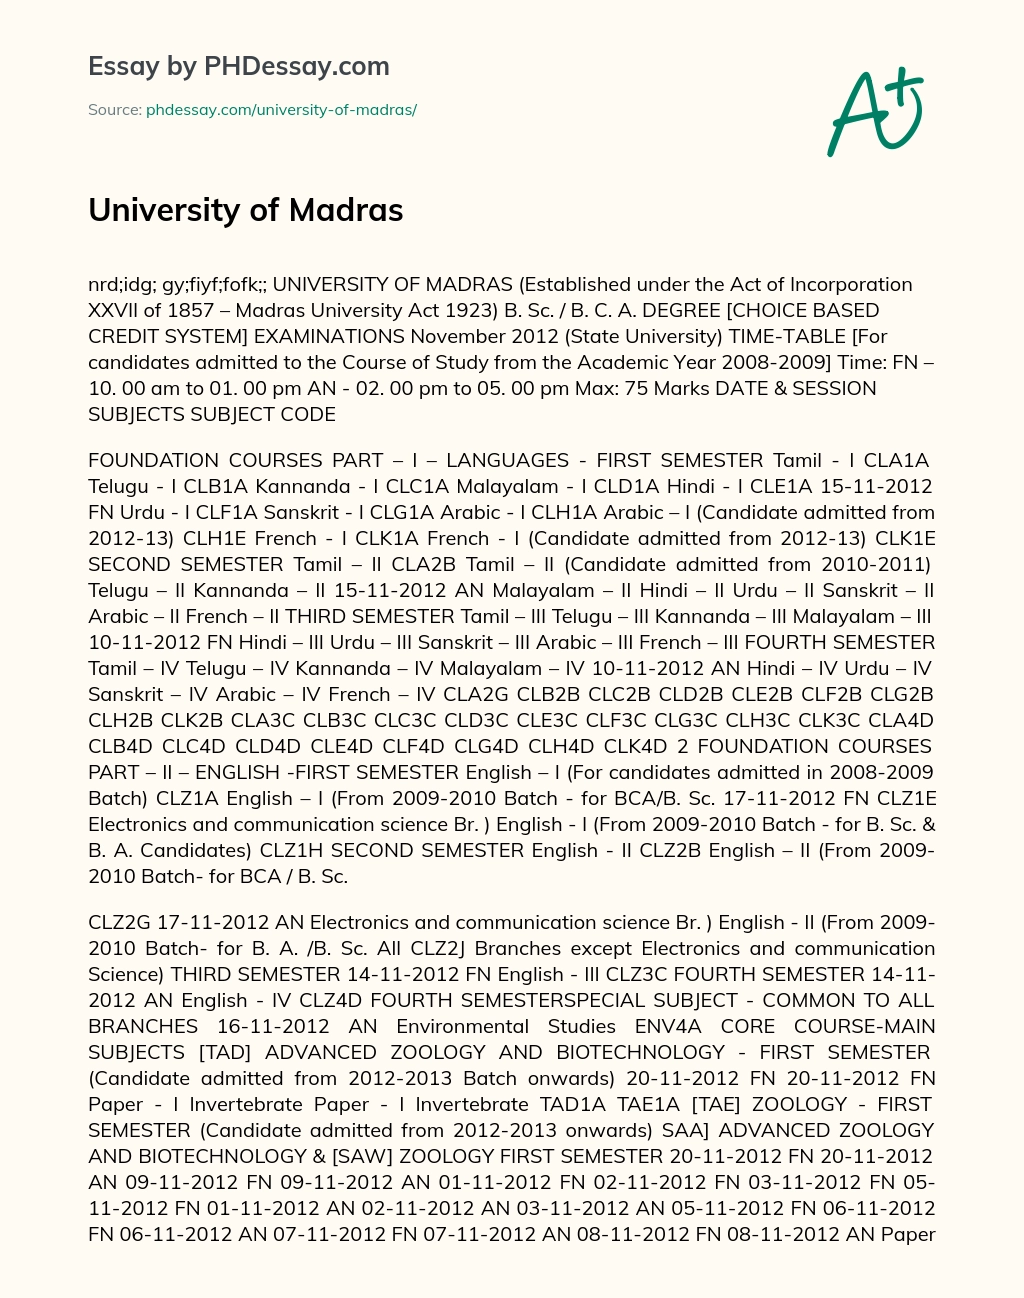 University of Madras essay